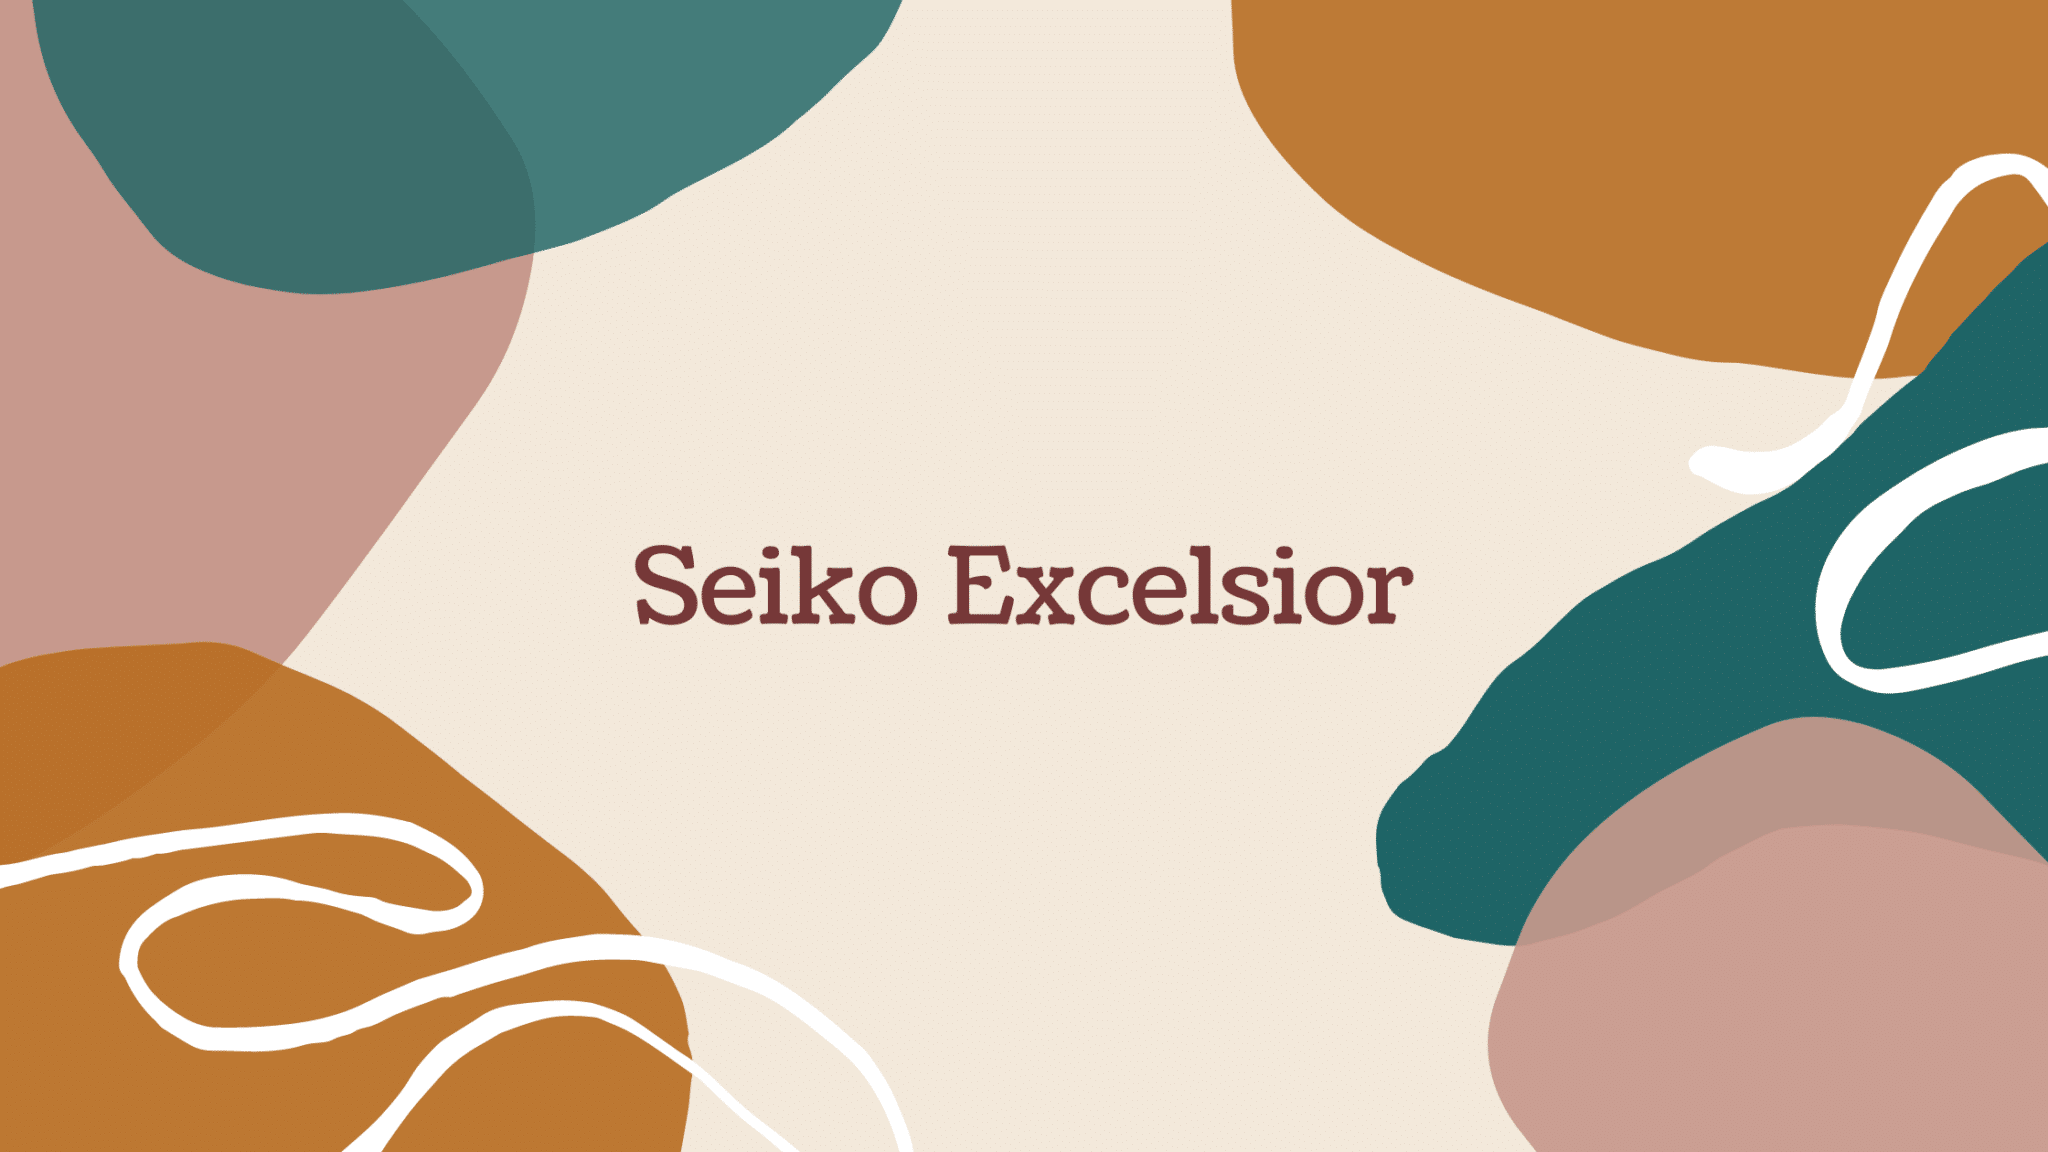 Seiko Excelsior